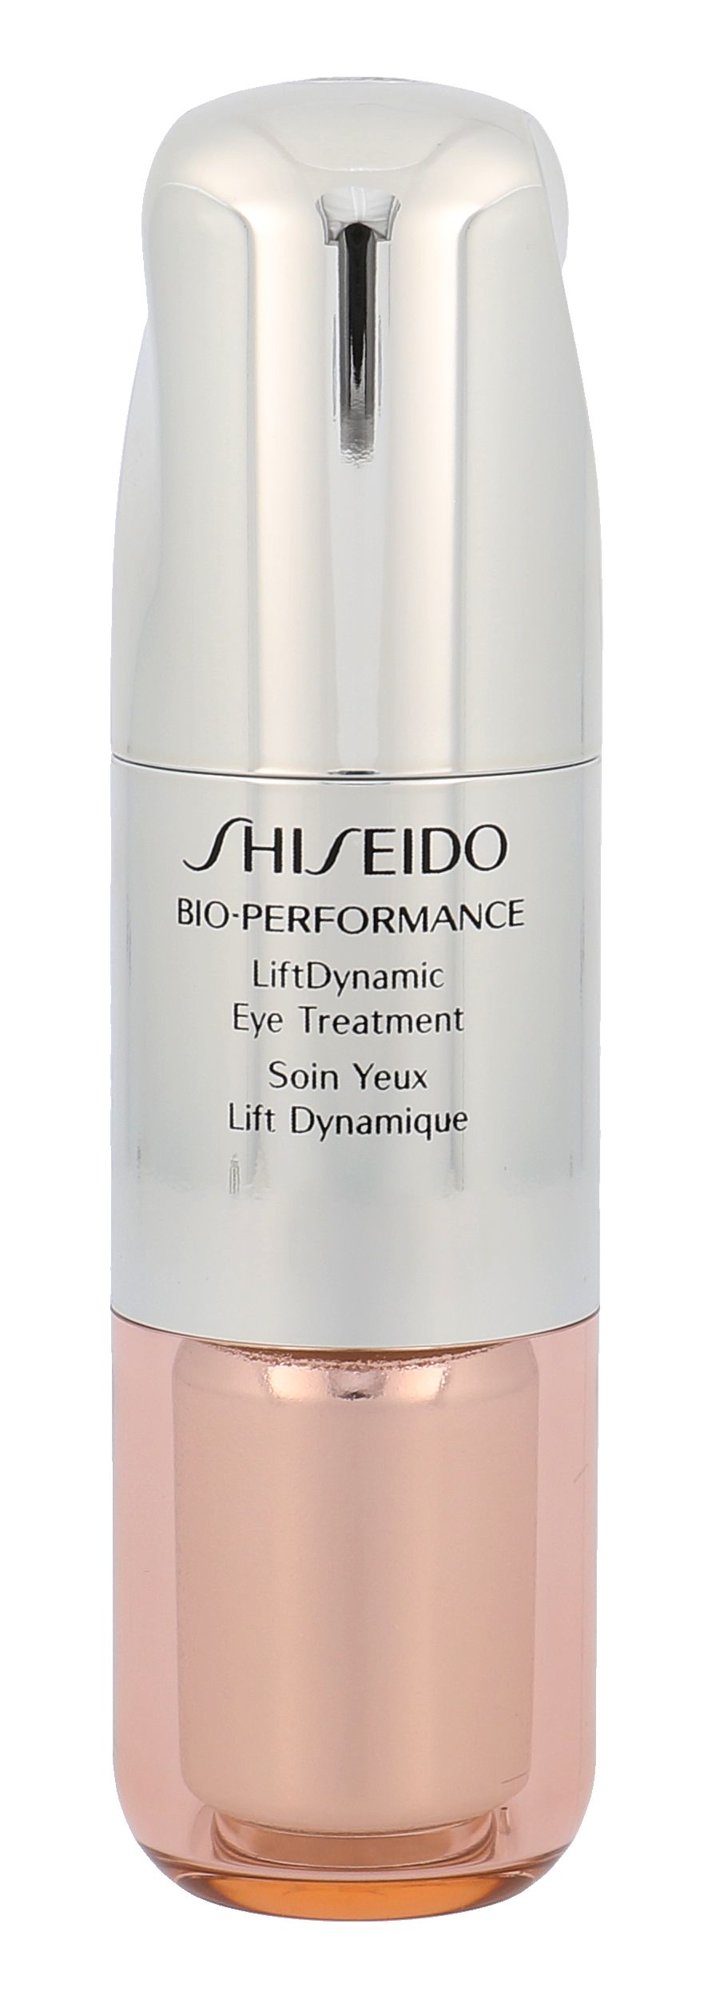 Shiseido Bio-Performance LiftDynamic Eye Treatment paakių kremas